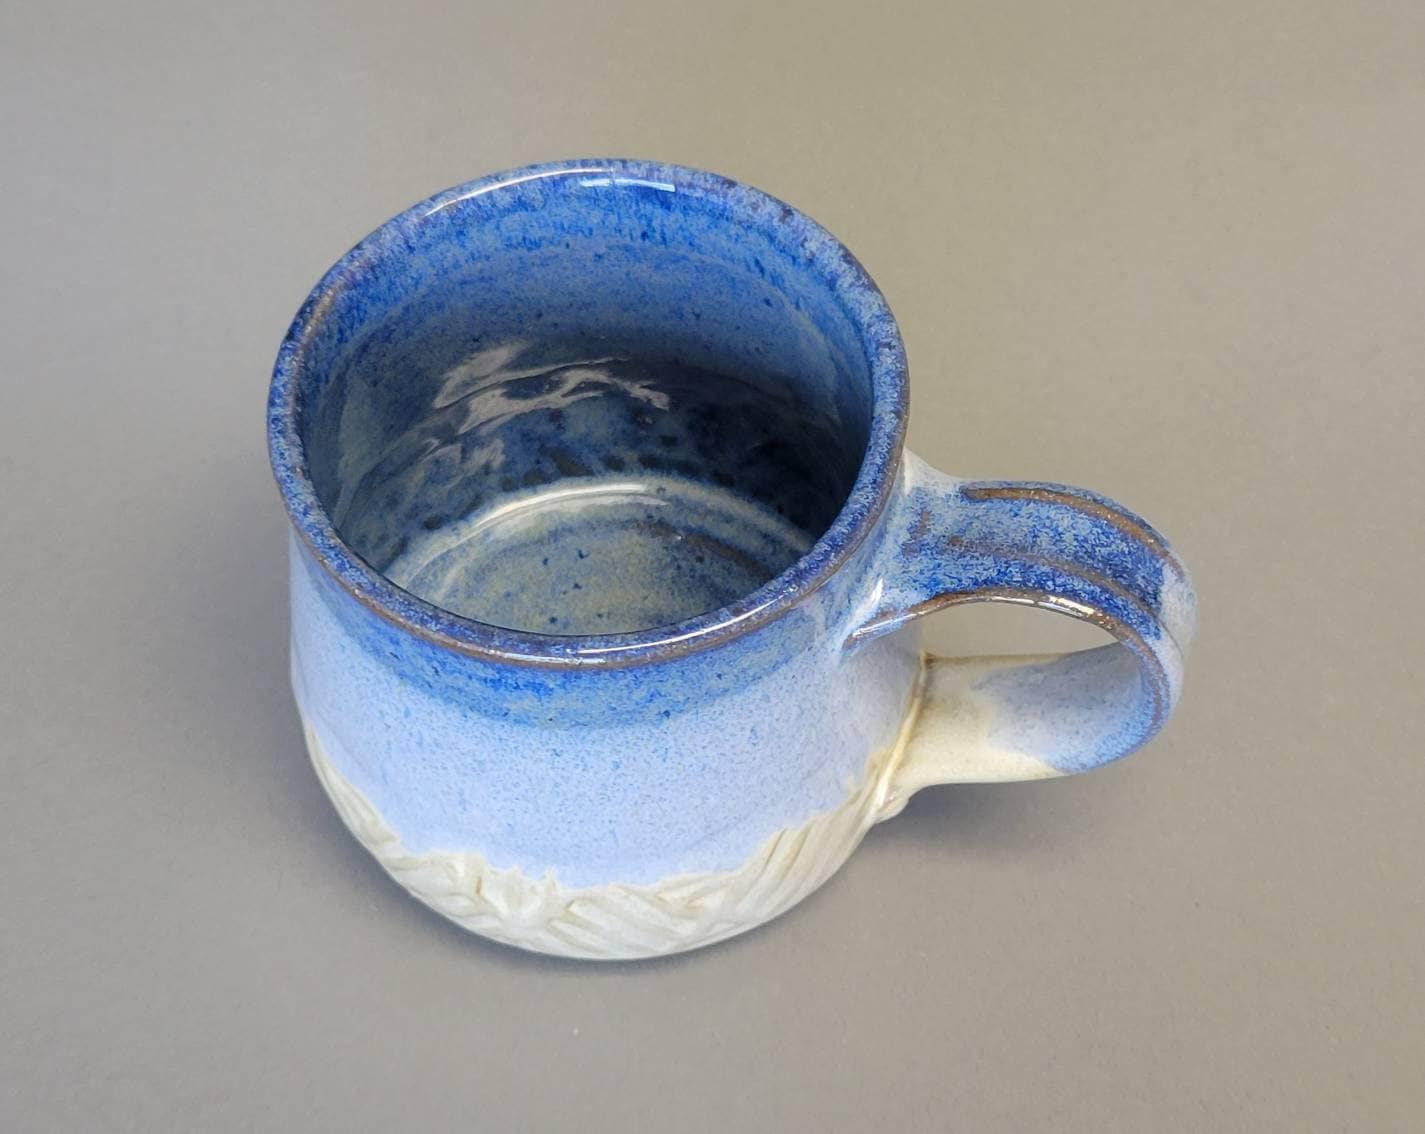 Morning Coffee Mug Geometric Texture in Rustic Farmhouse Style - Handmade Ceramic Pottery Blue Yellow